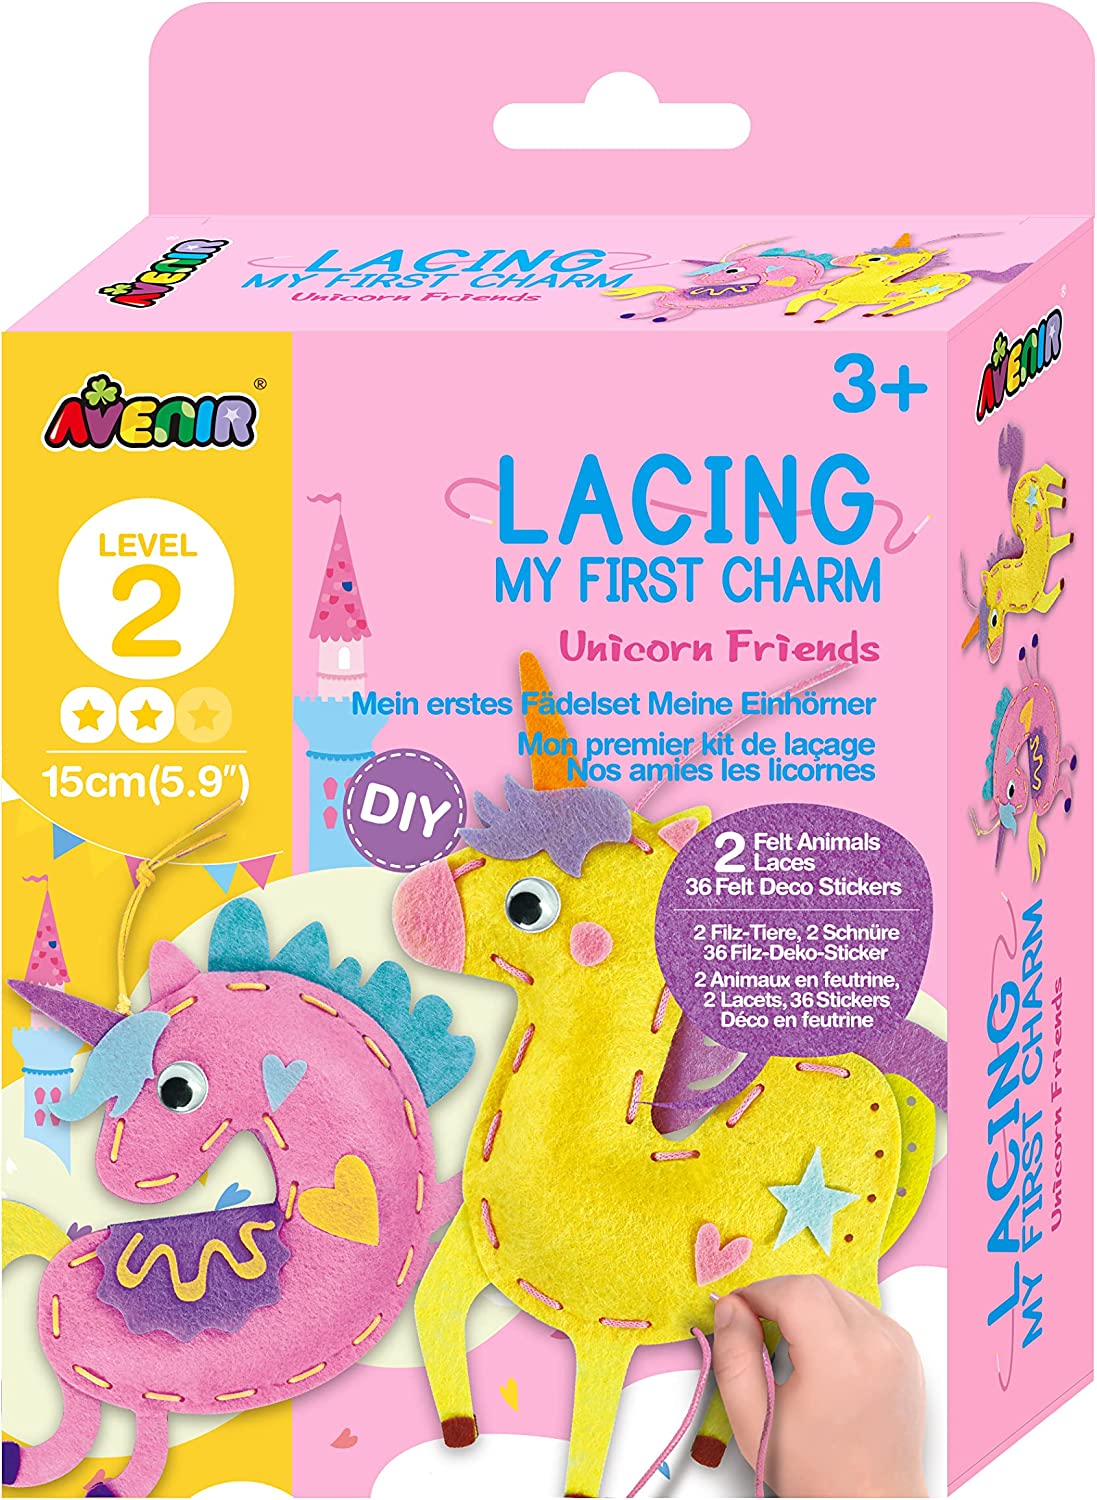 Lacing My First Charm: Unicorn Friends by Avenir #7331801